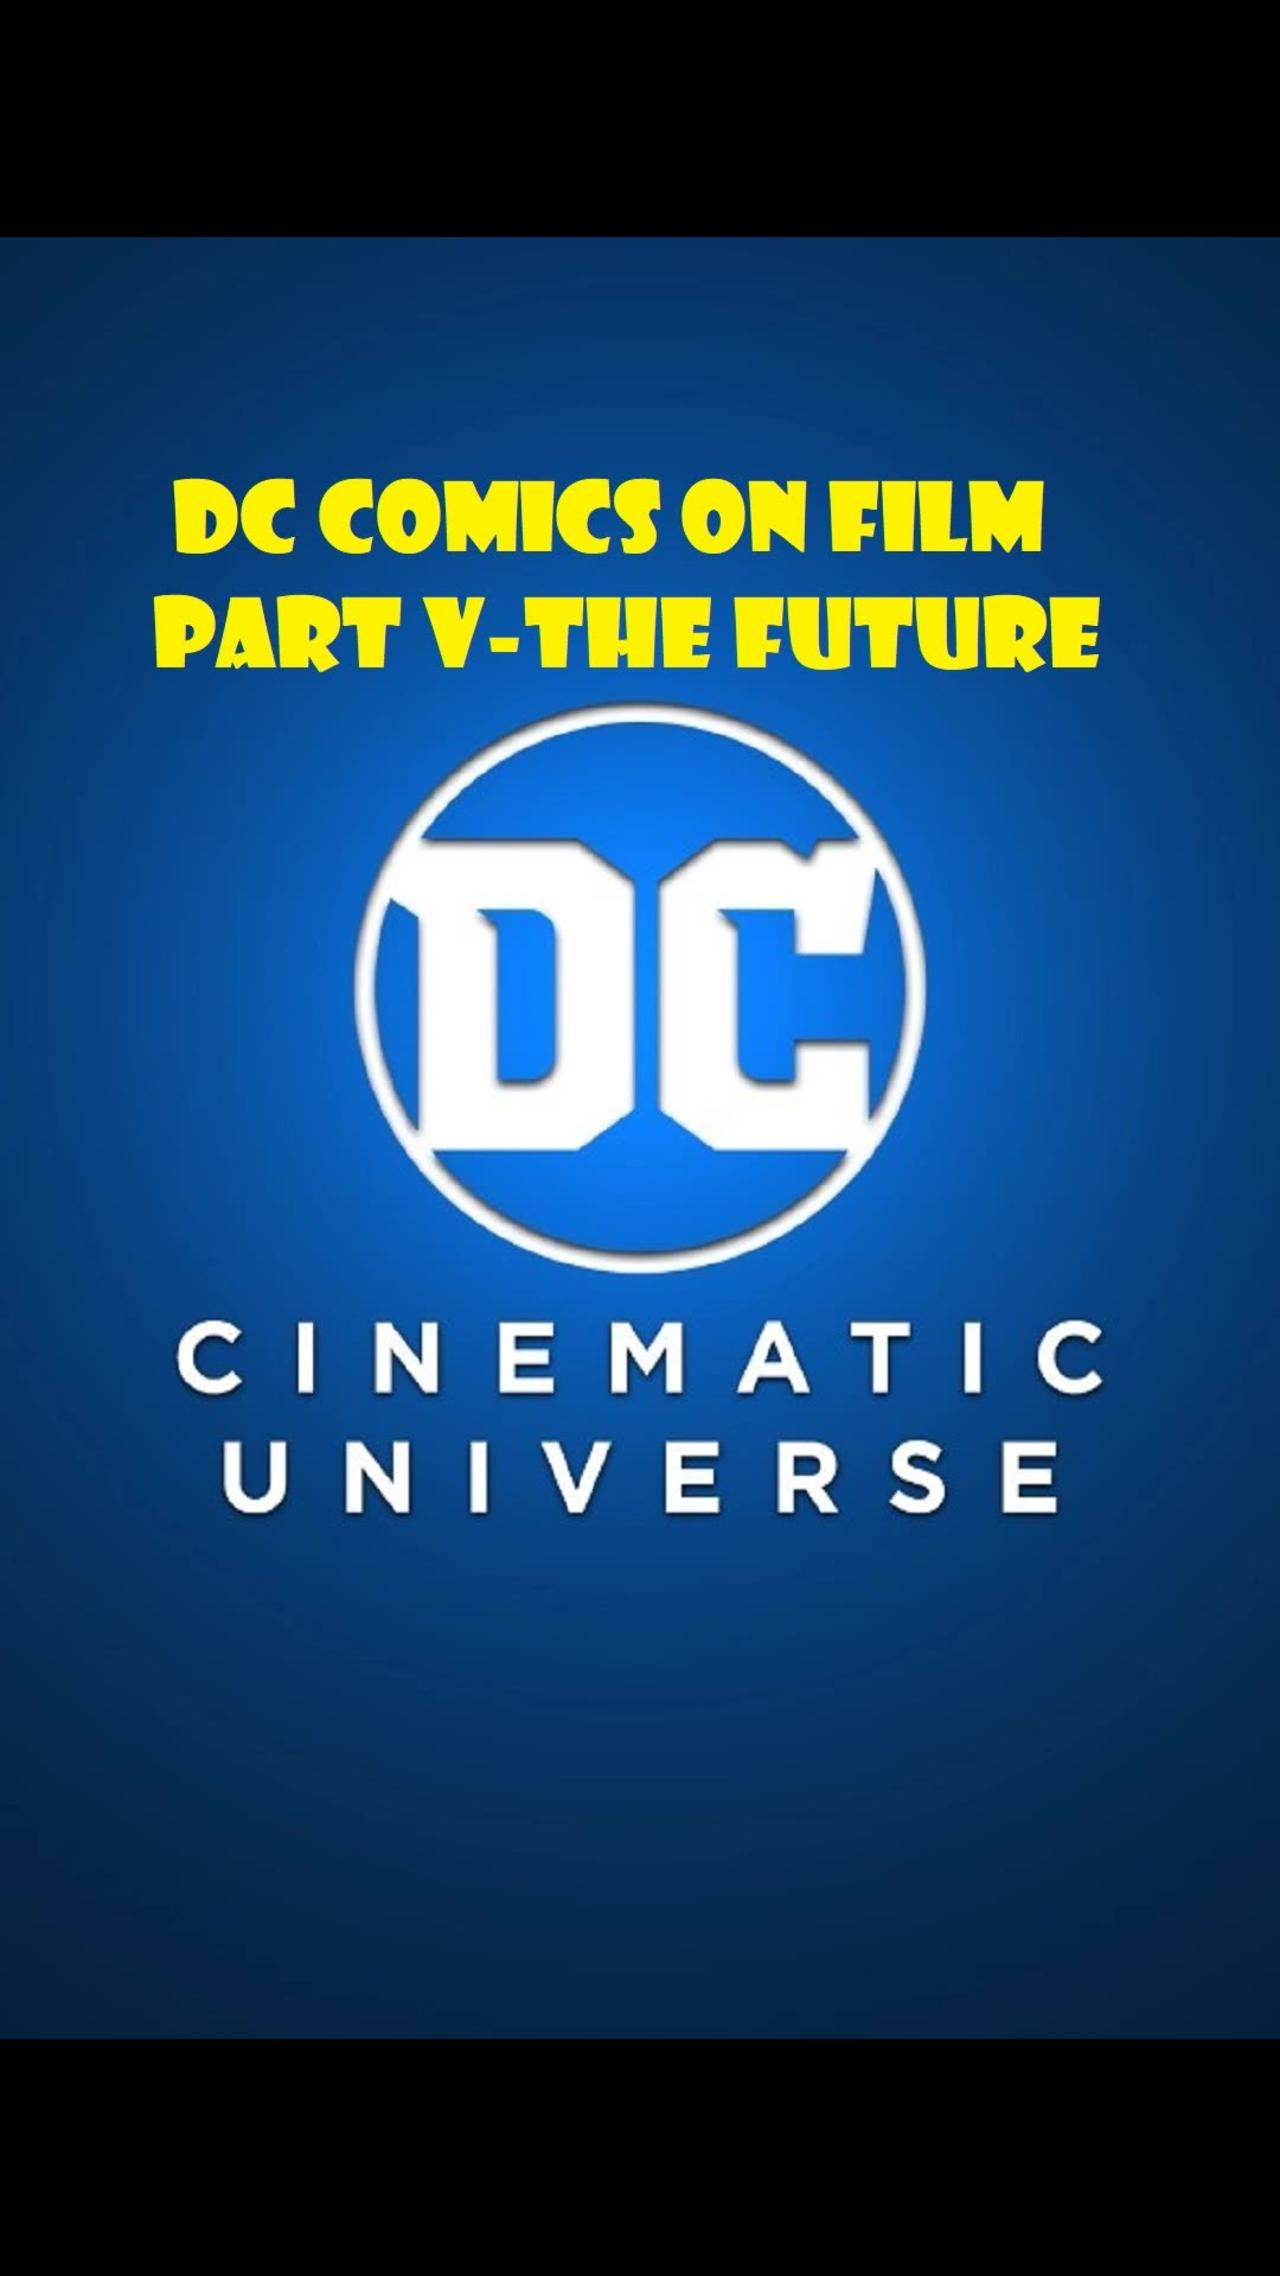 DC Comics on Film Part V Coming Soon!